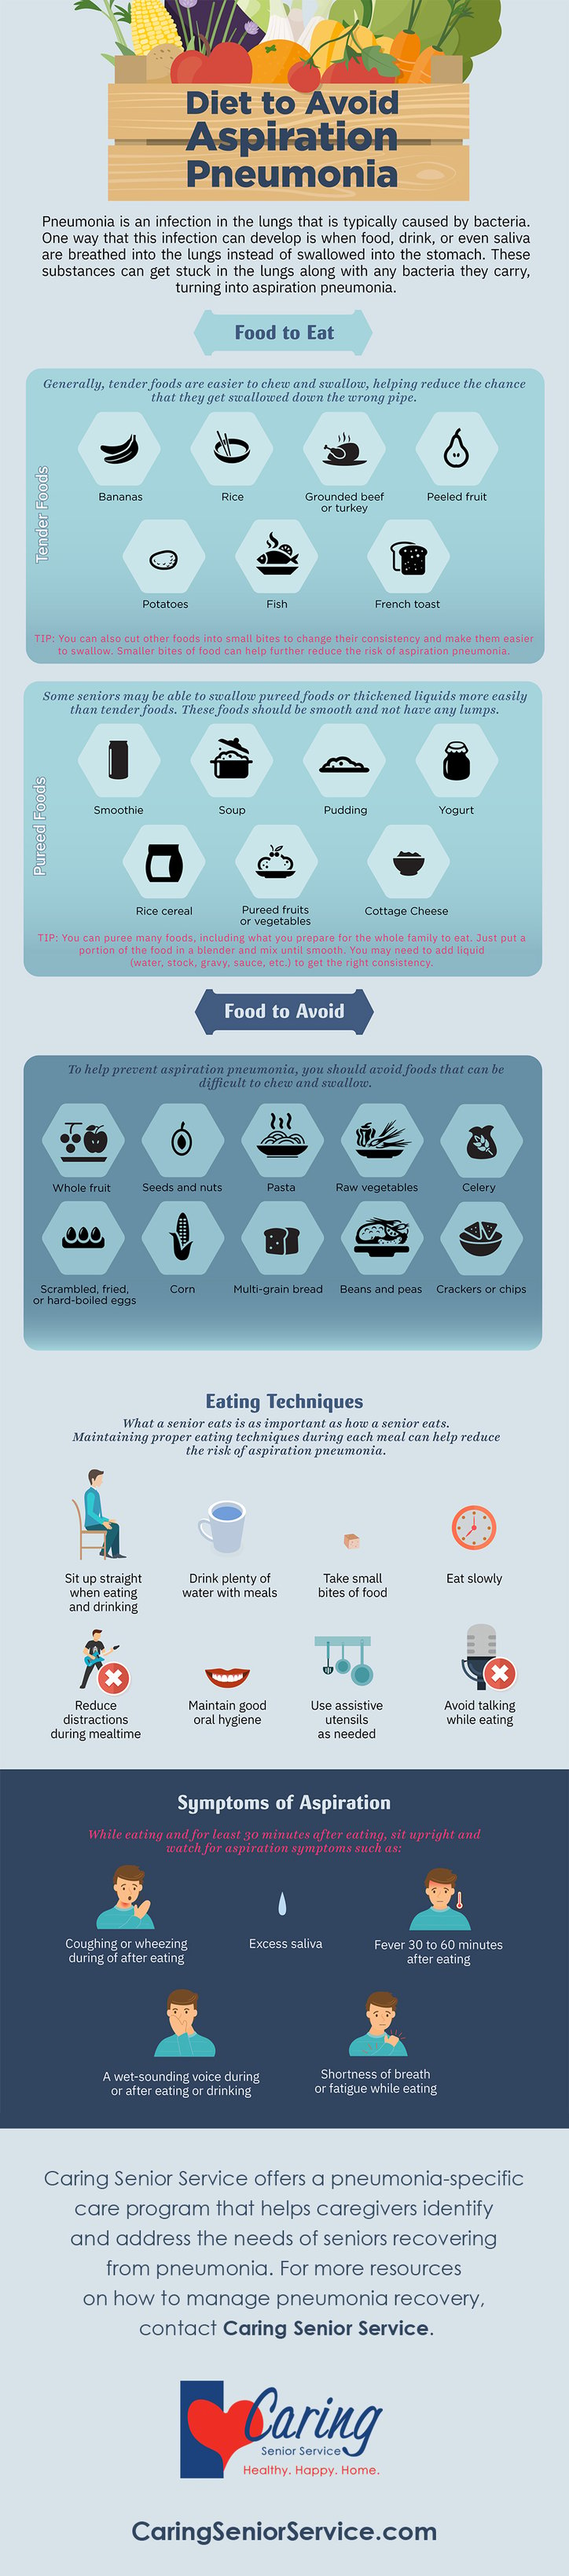 Diet Avoid Aspiration Pneumonia Infographic- Branded